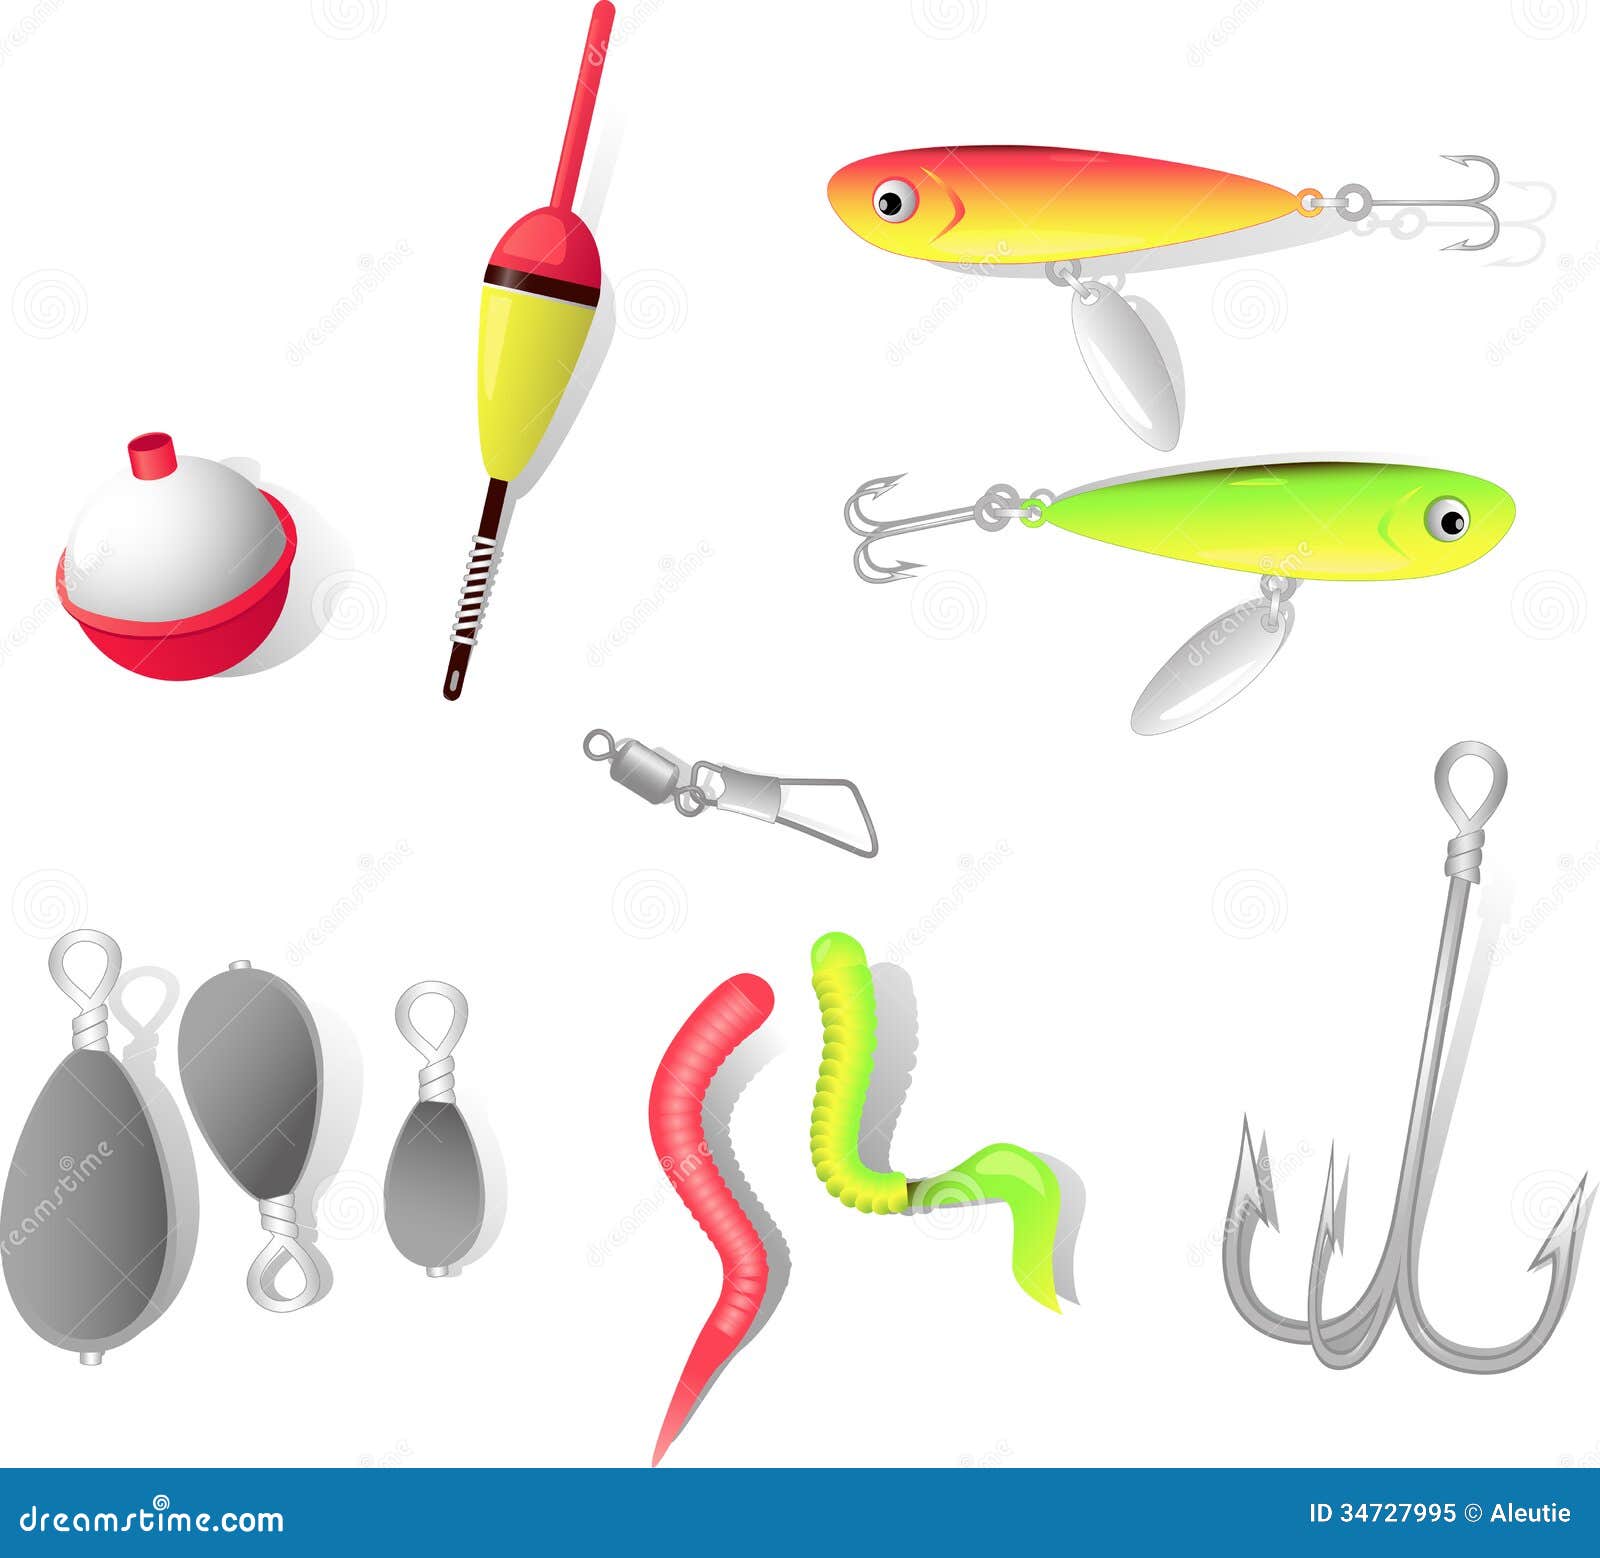 Fishing tackle stock vector. Illustration of fishing - 34727995